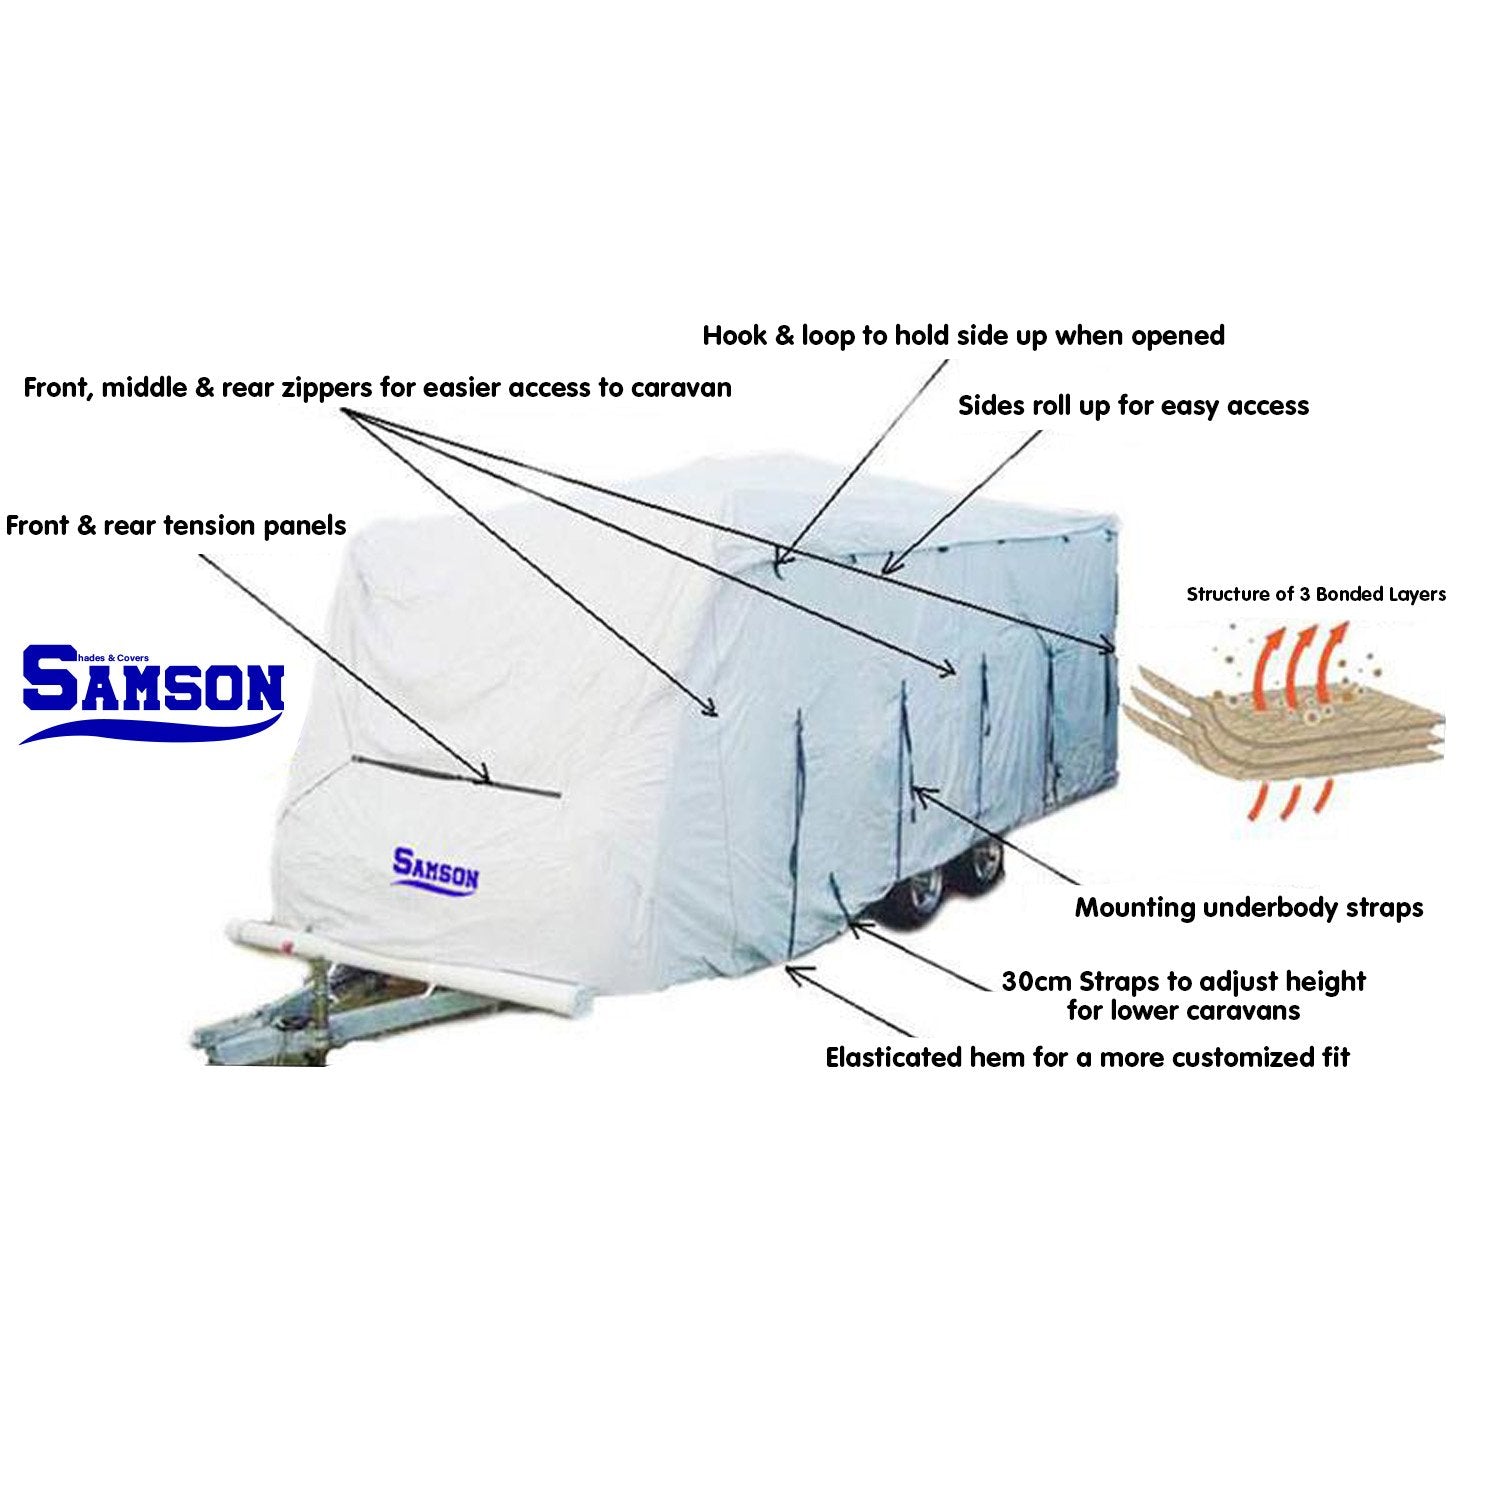 Samson Heavy Duty Caravan Cover 14-16ft